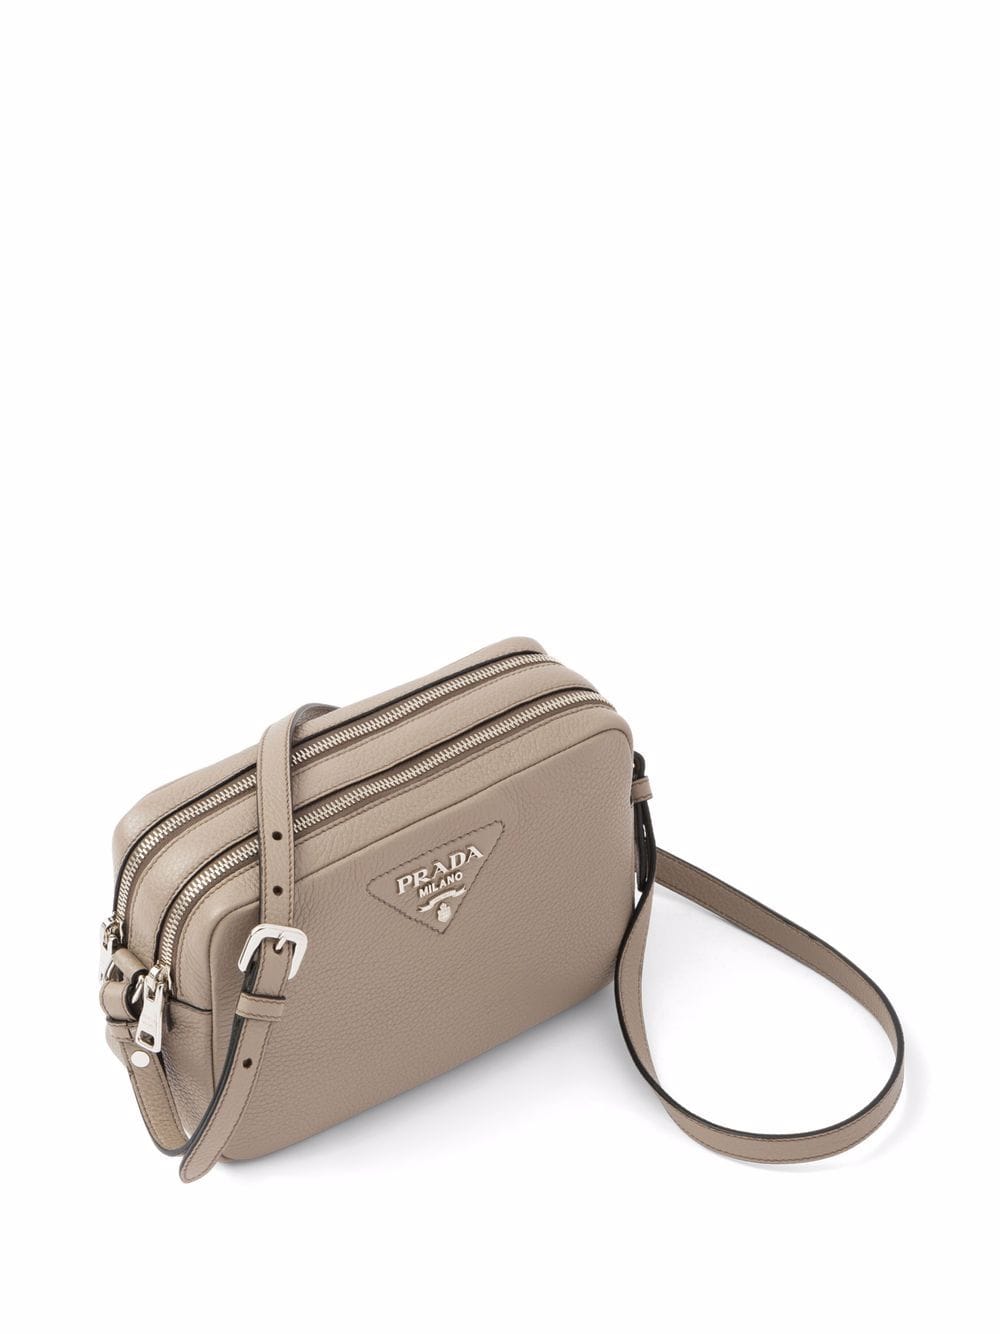 How to Identify an Authentic Prada Handbag by Dakini's Choice 